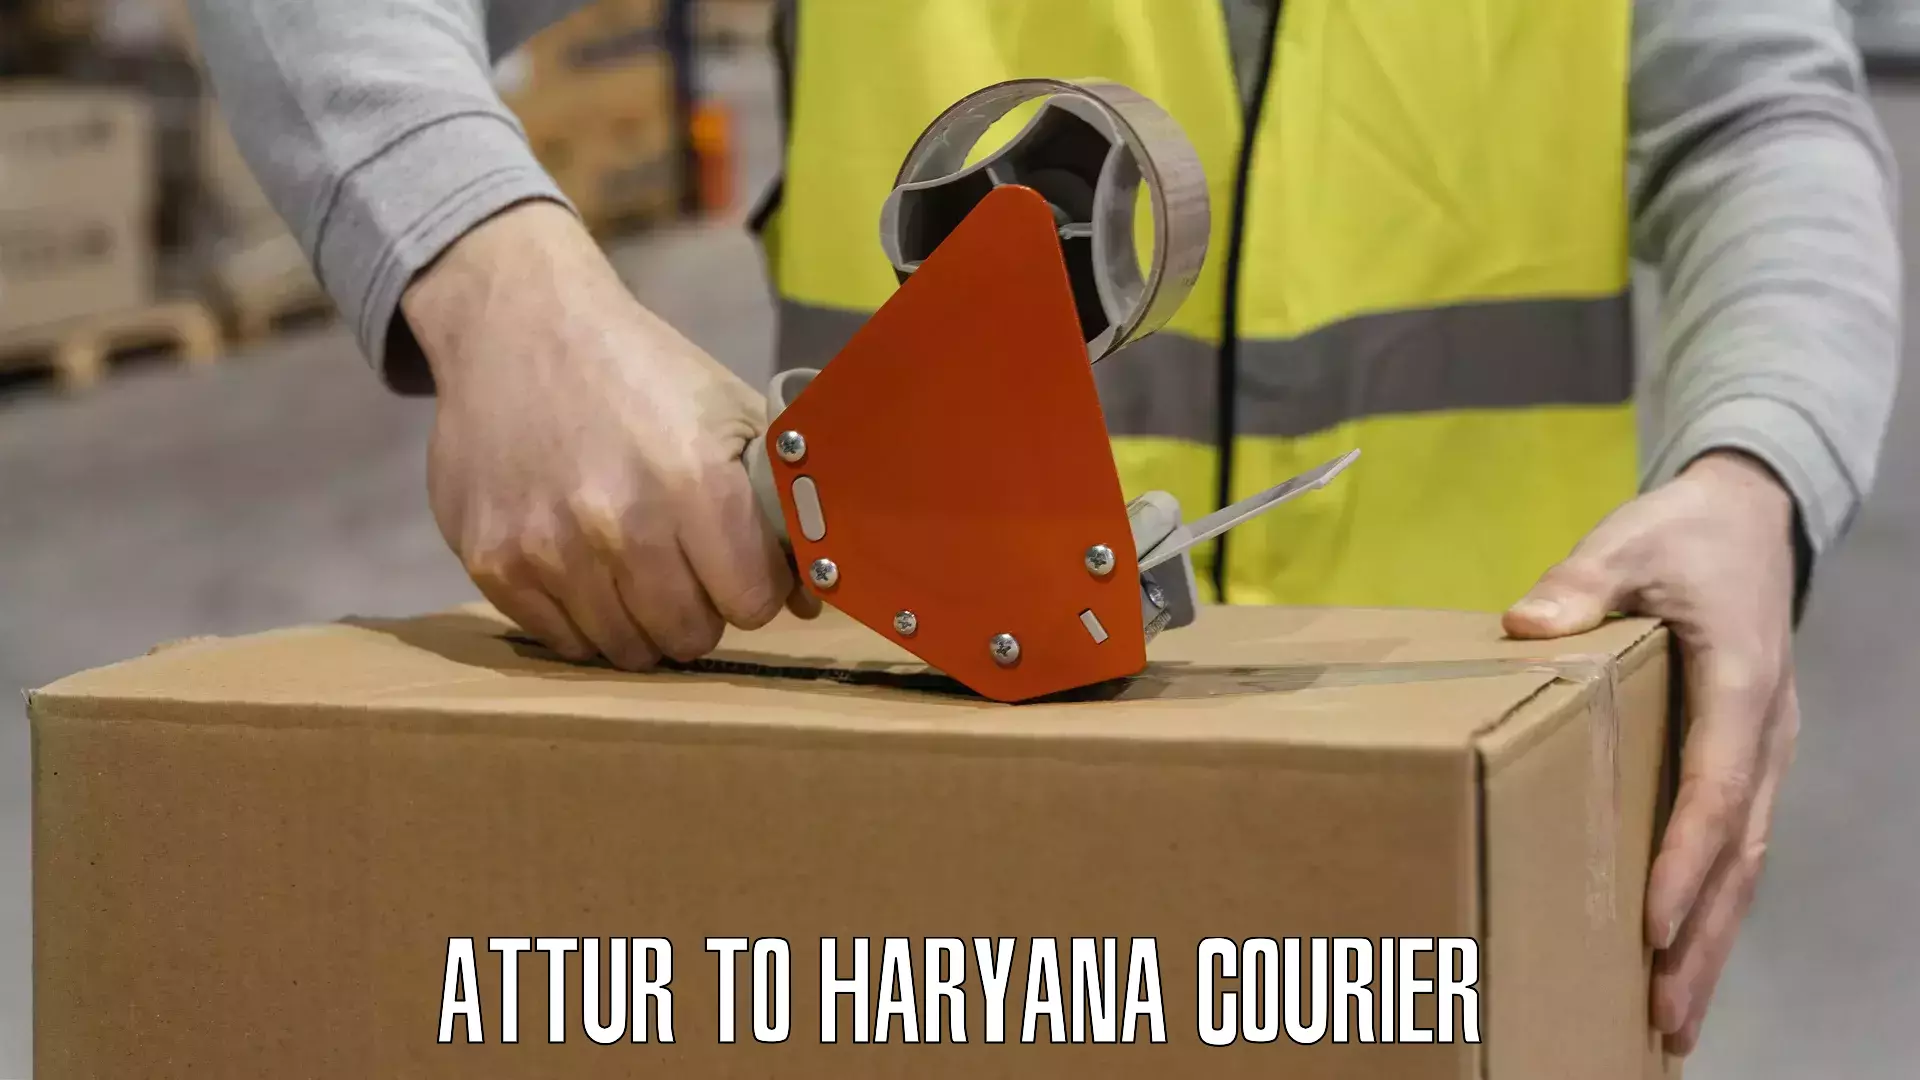 Nationwide courier service Attur to Gurugram